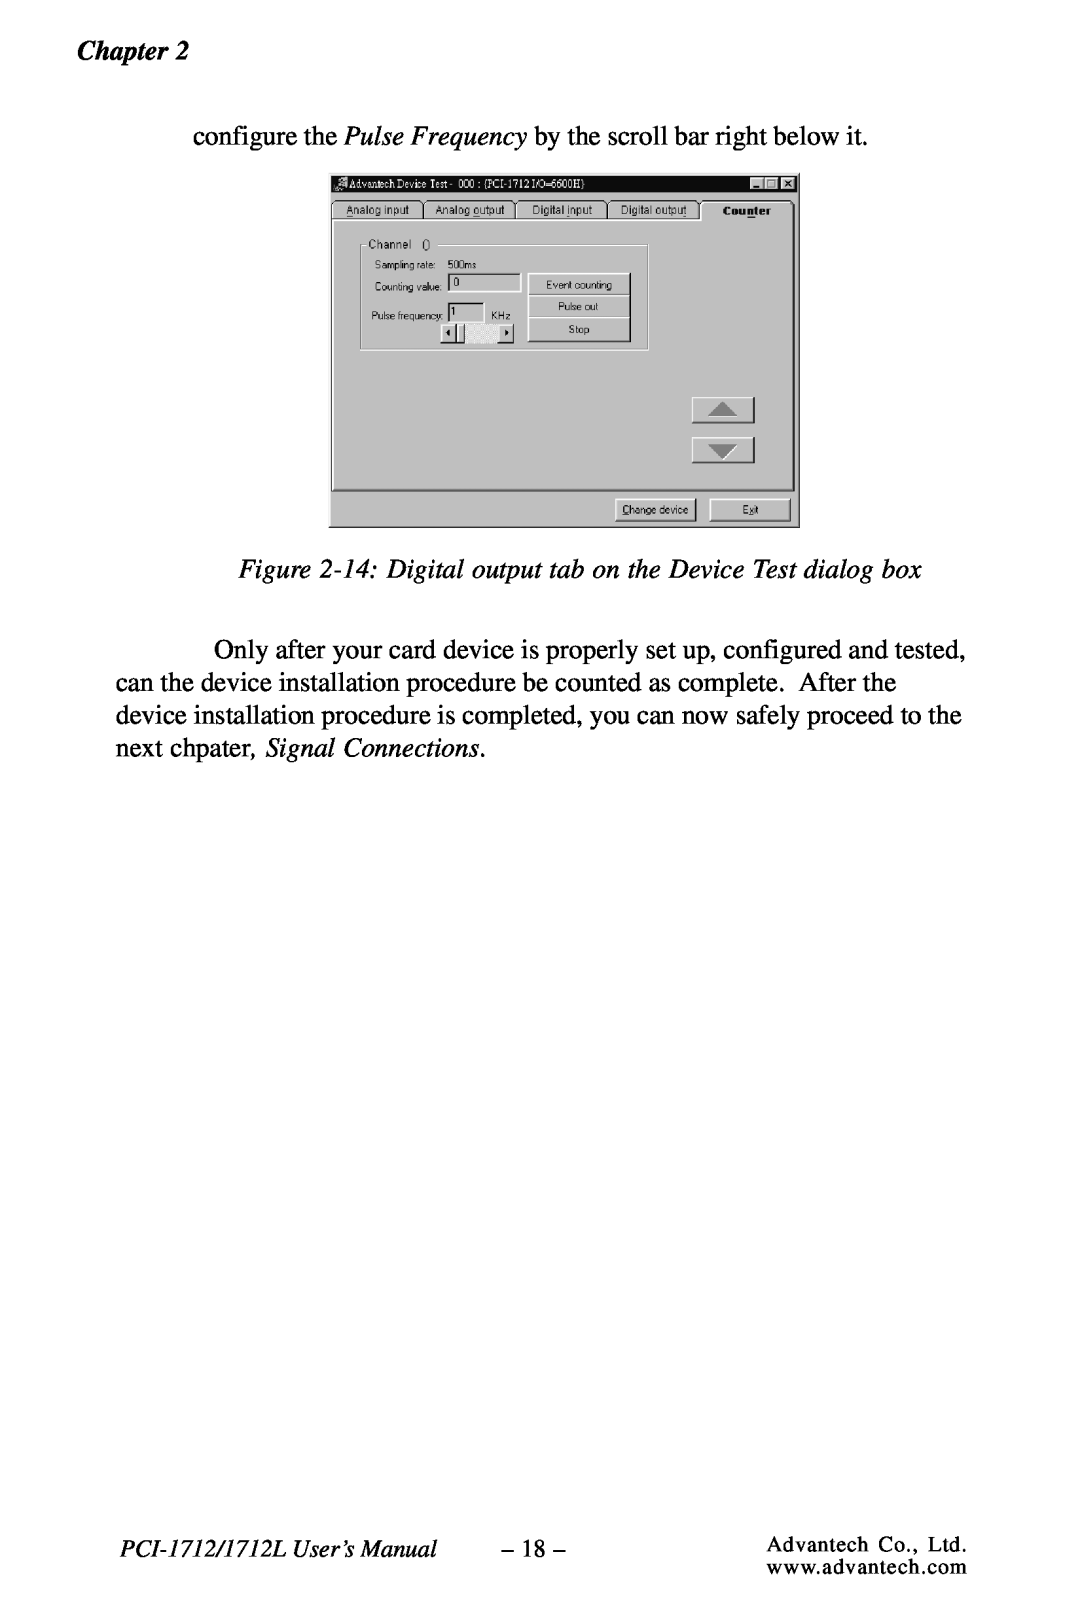 Konica Minolta PCI-1712L user manual 14 Digital output tab on the Device Test dialog box 